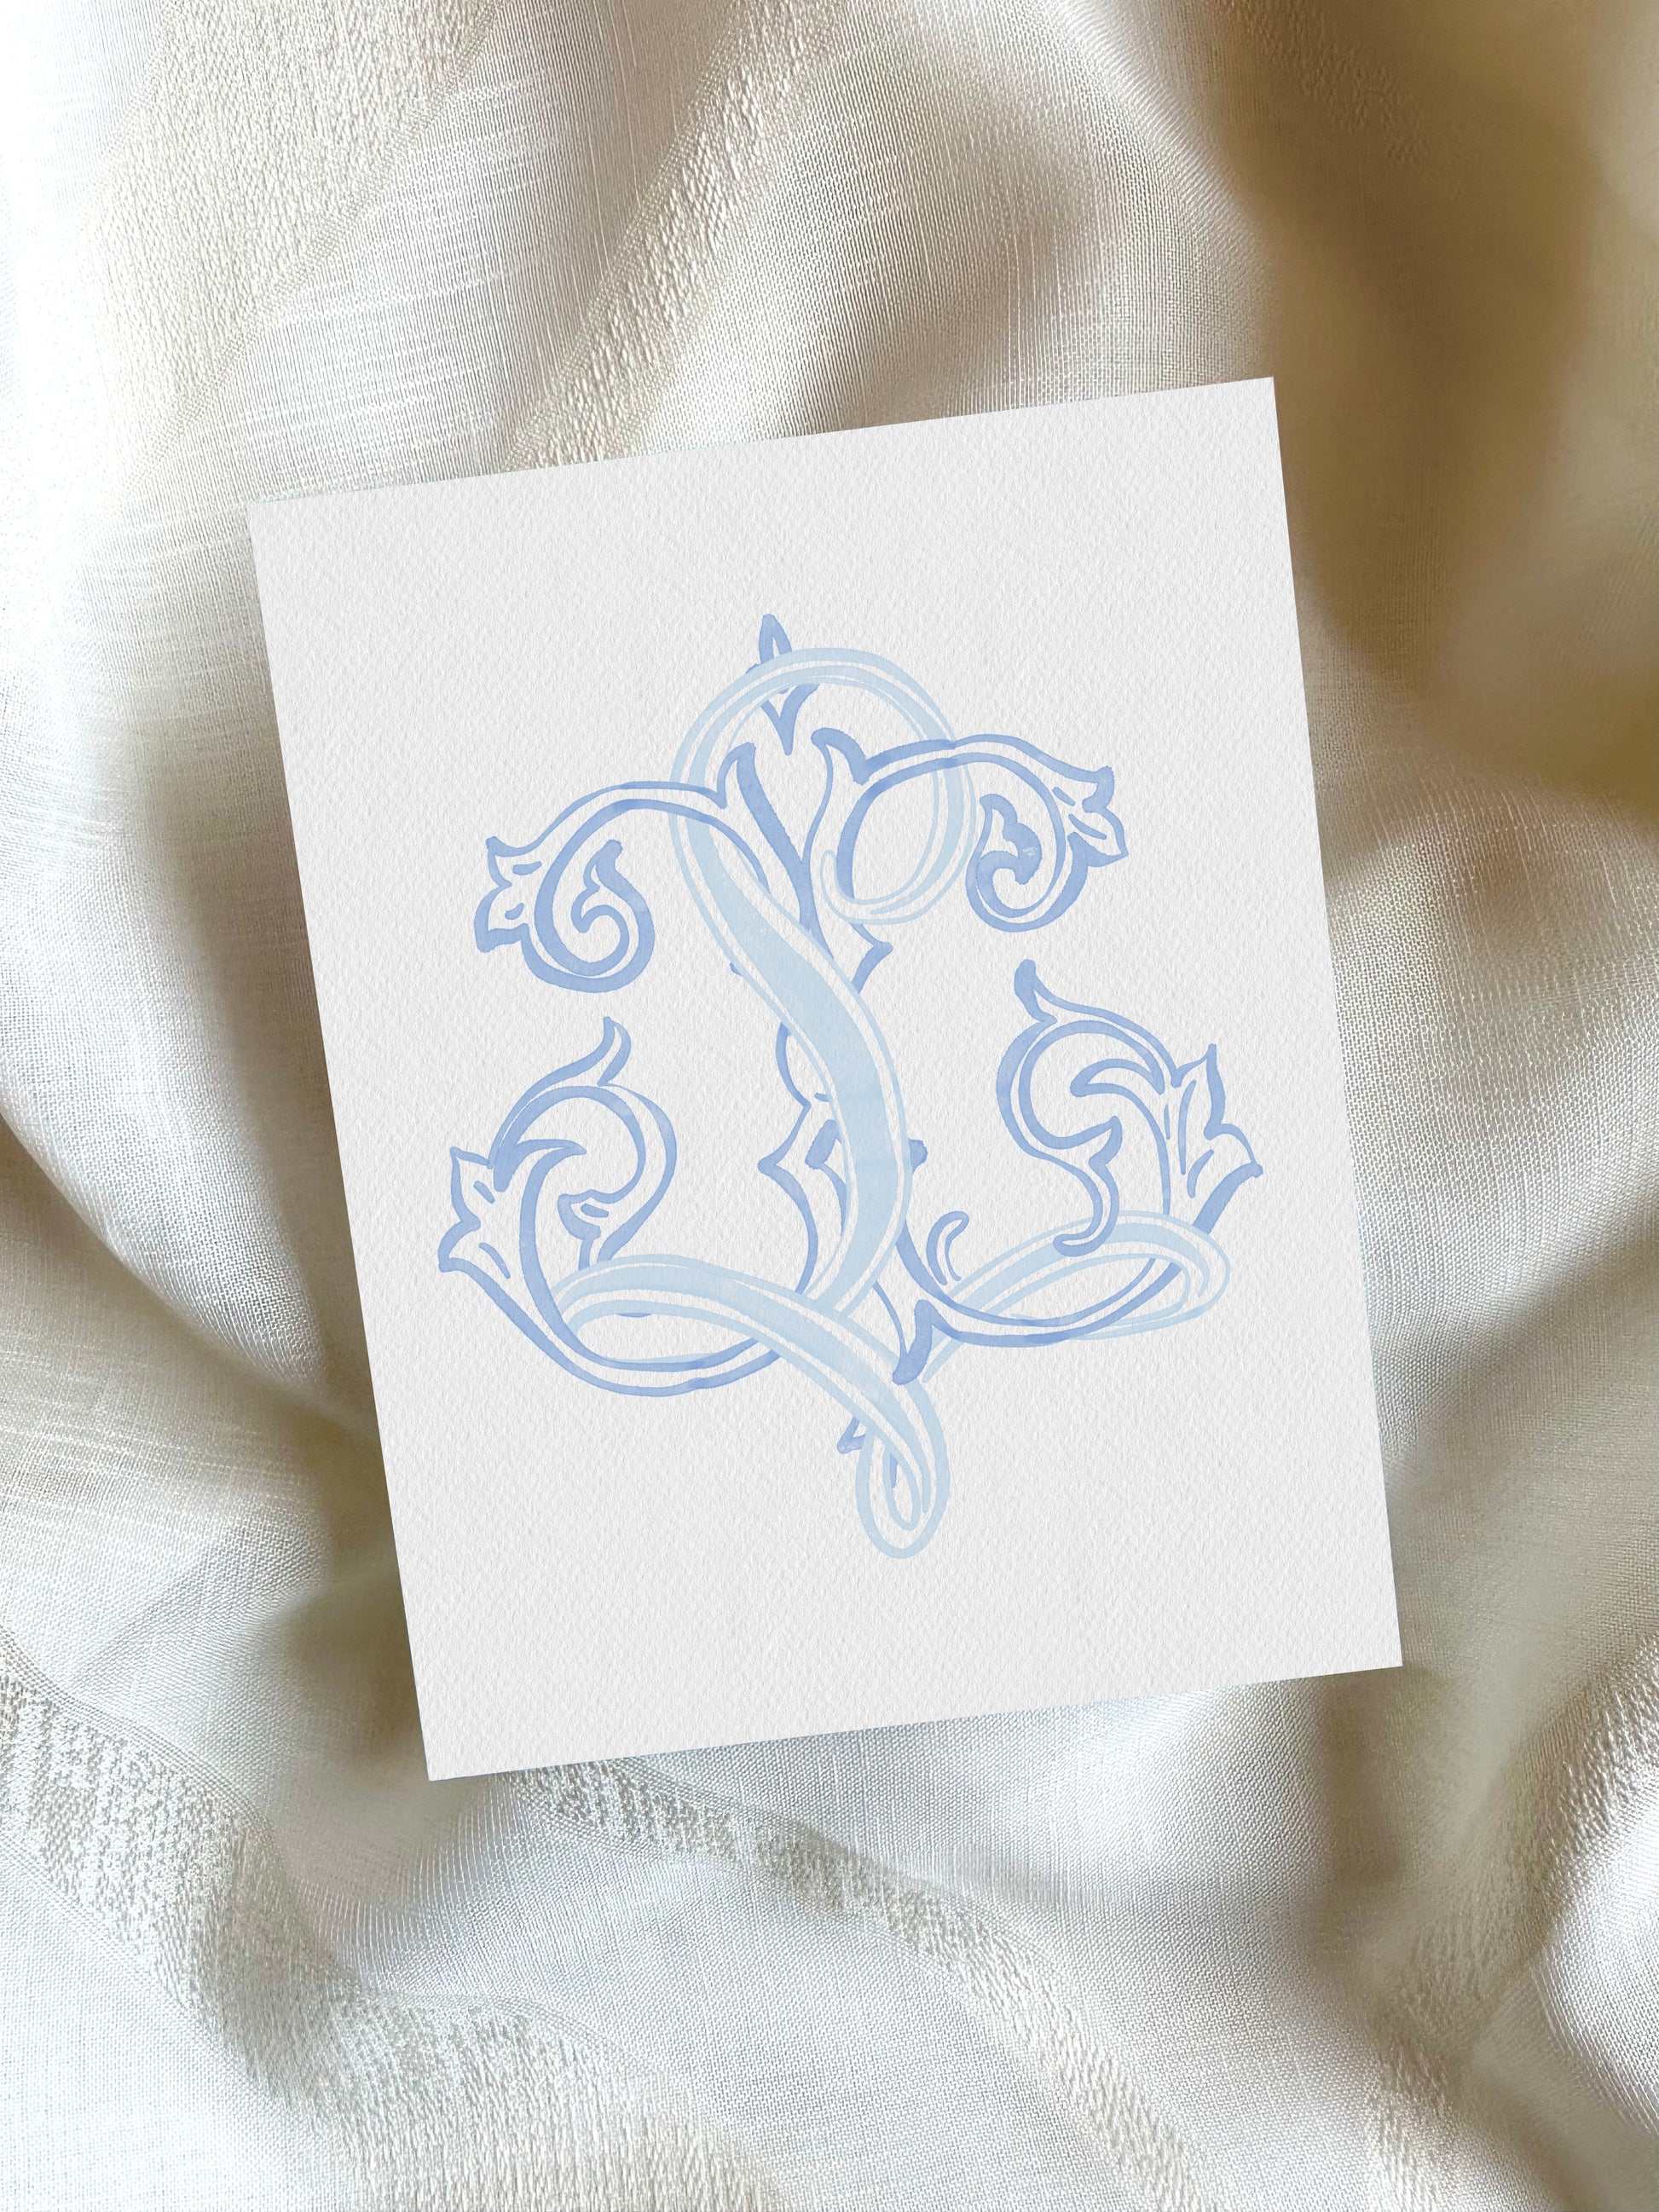 2 Letter Monogram with Letters LX XL | Digital Download - Wedding Monogram SVG, Personal Logo, Wedding Logo for Wedding Invitations The Wedding Crest Lab